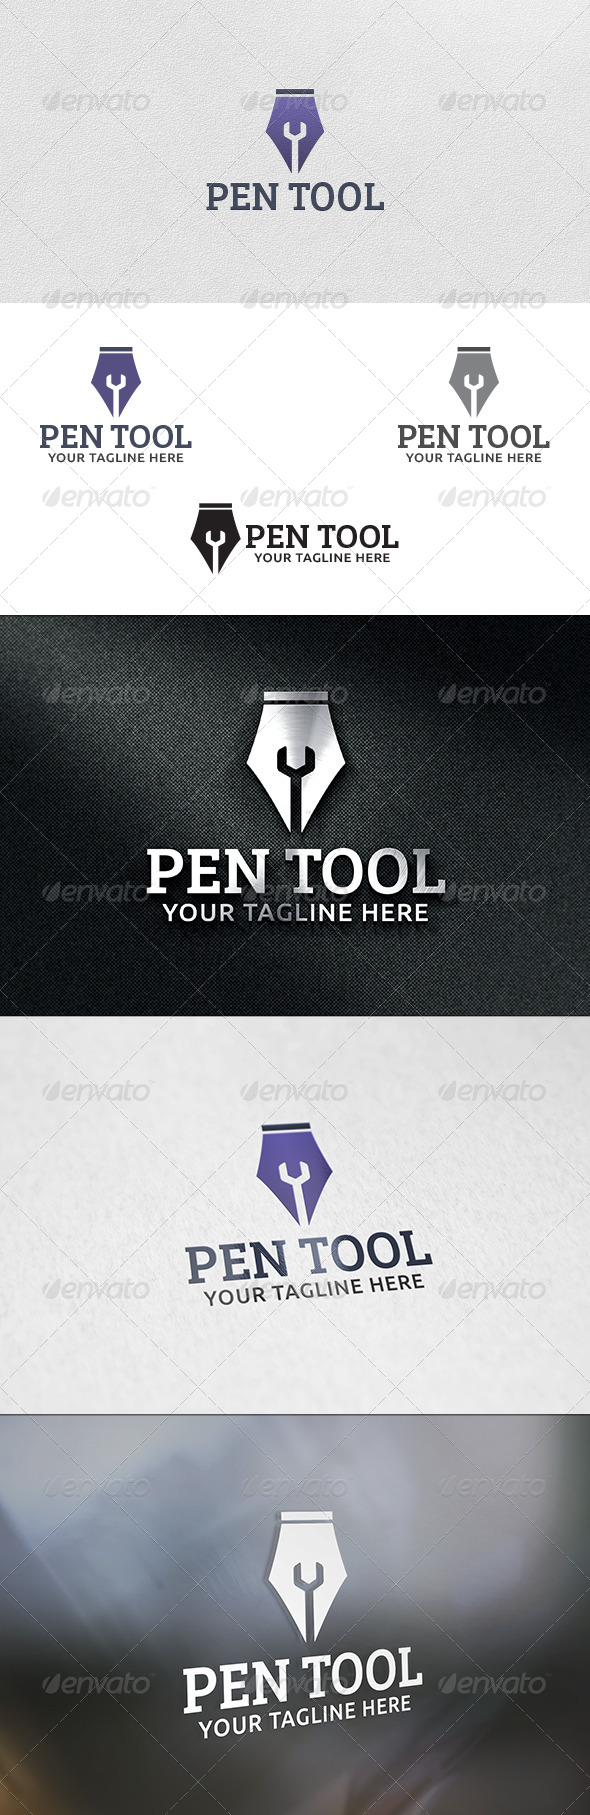 Pen Tool - Logo Template